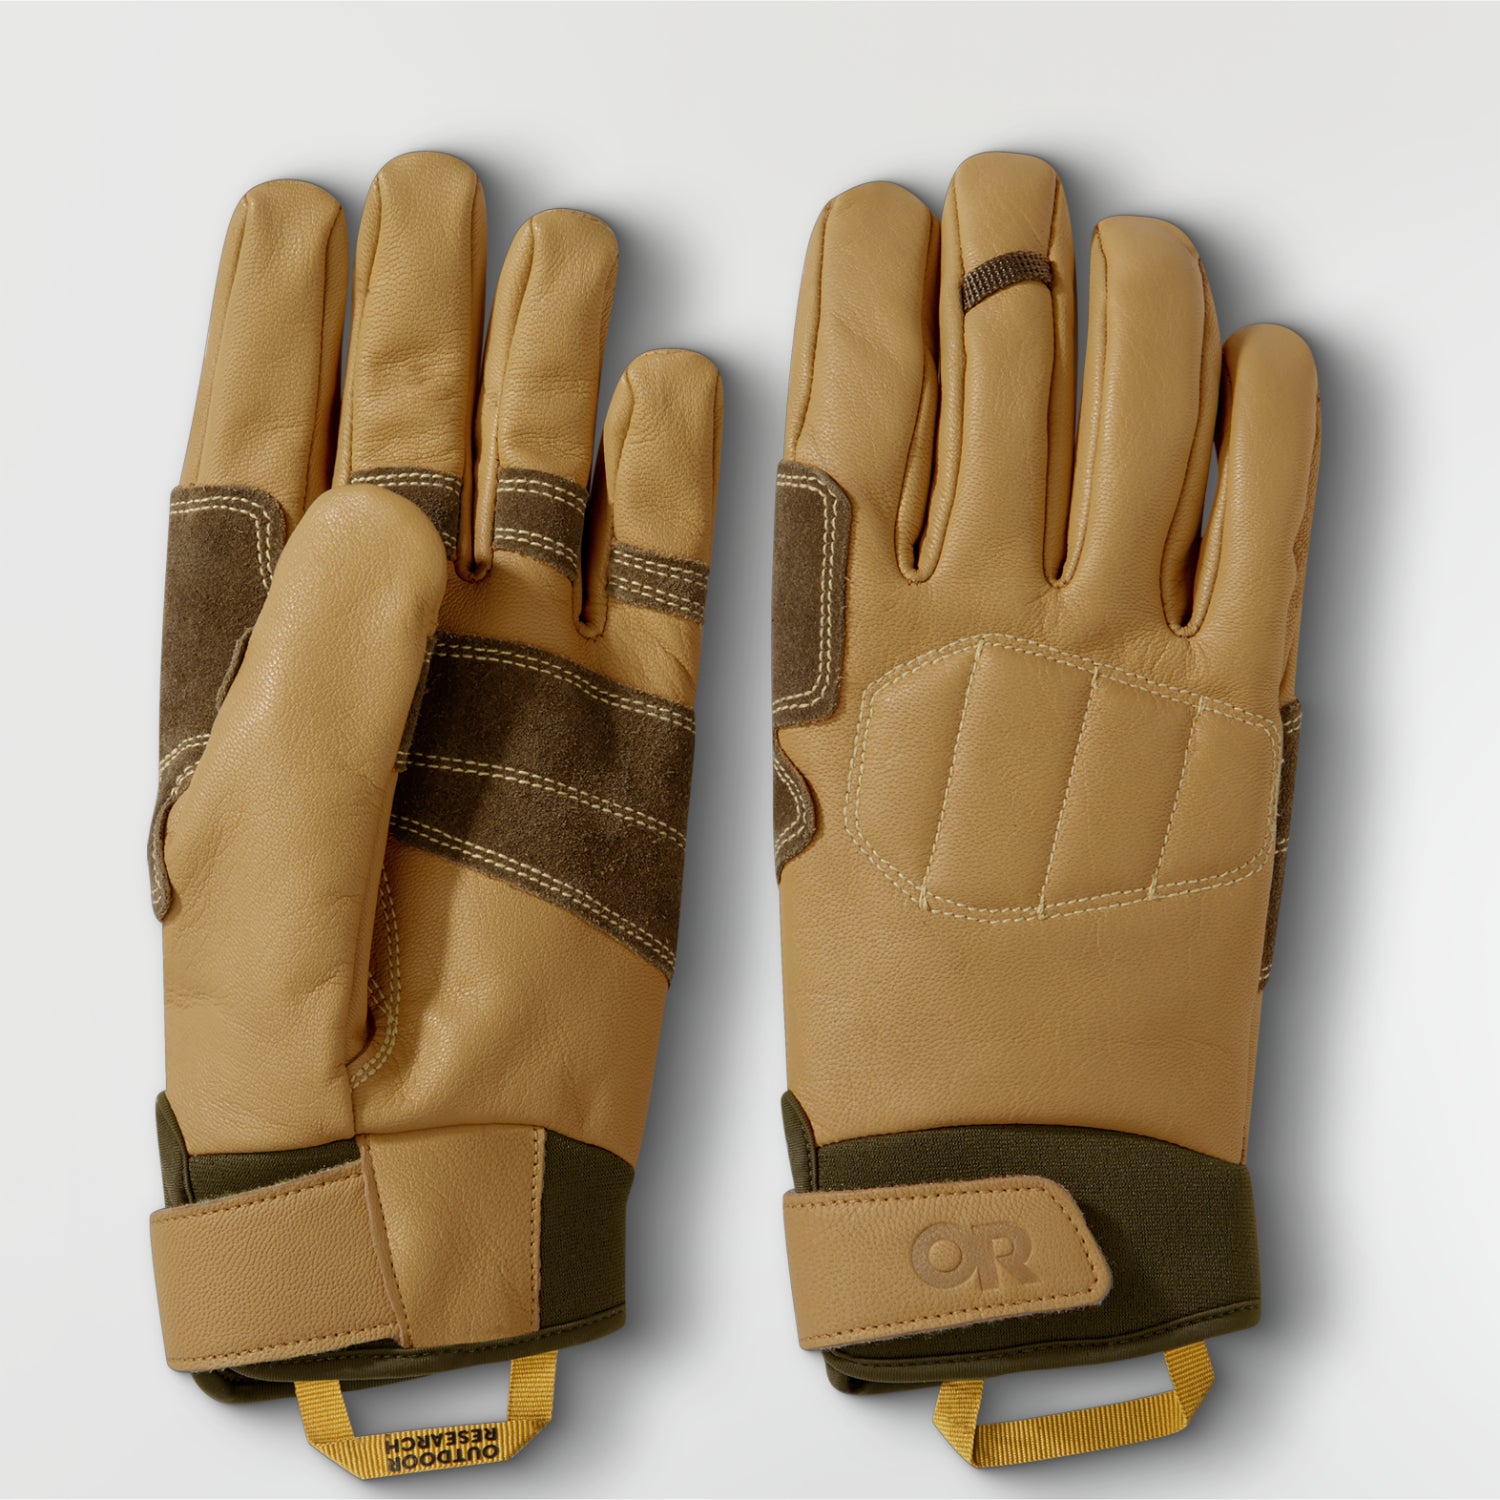 Outdoor Research Granite belay Gloves